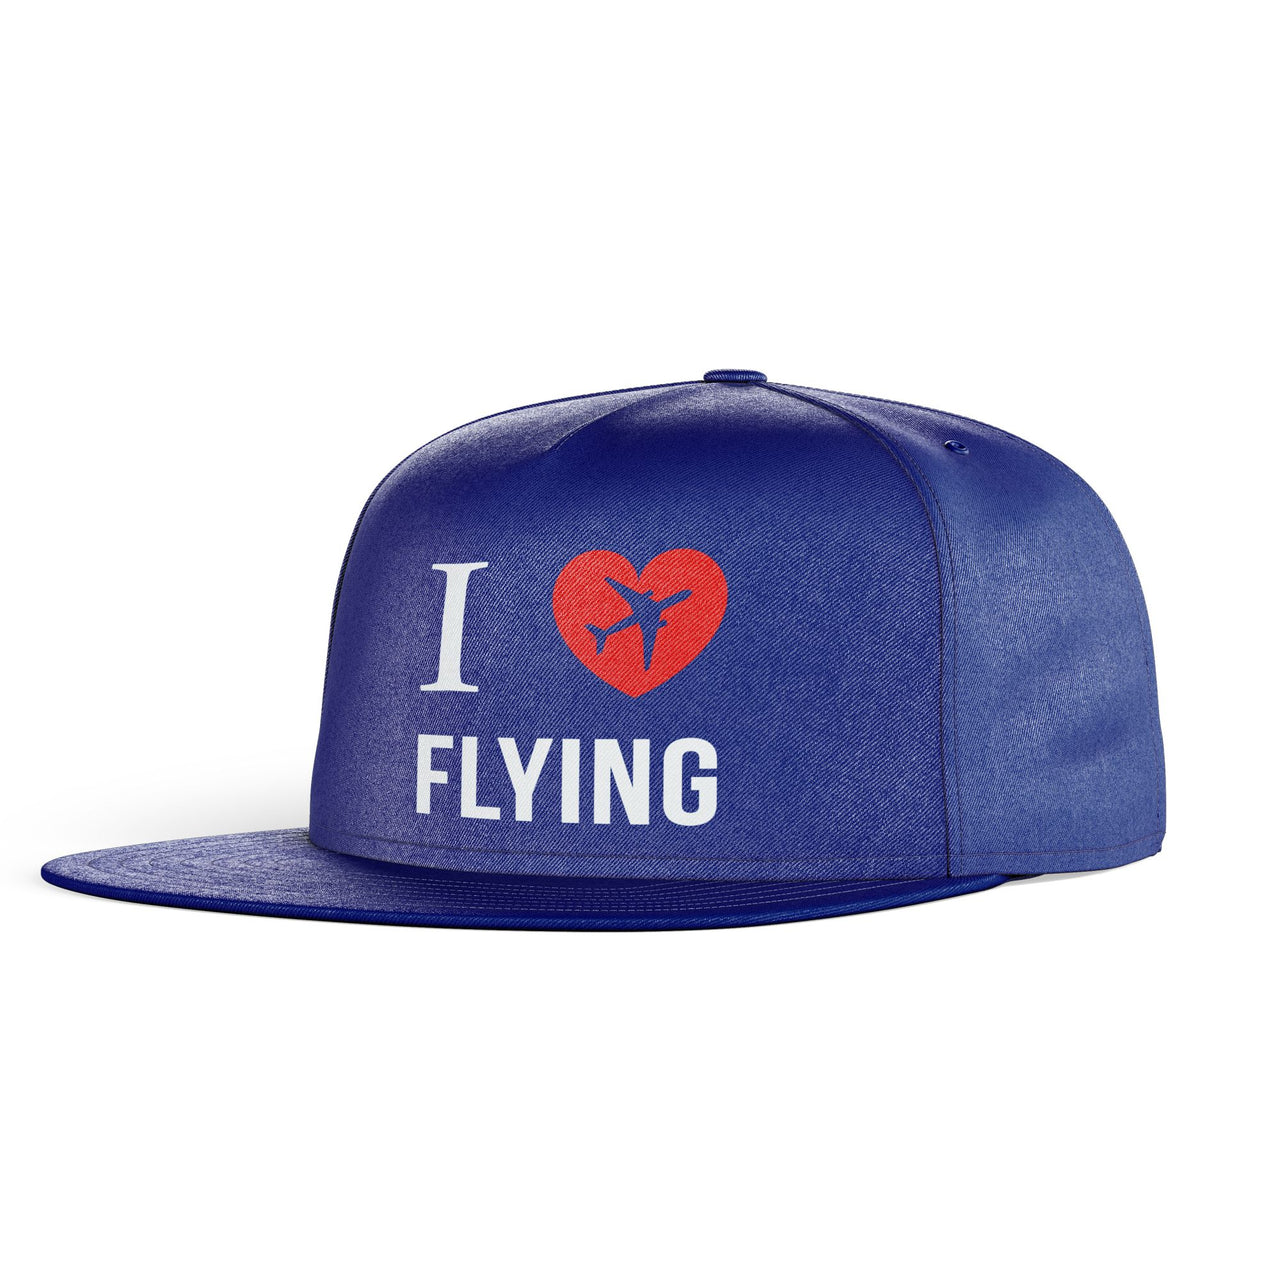 I Love Flying Designed Snapback Caps & Hats